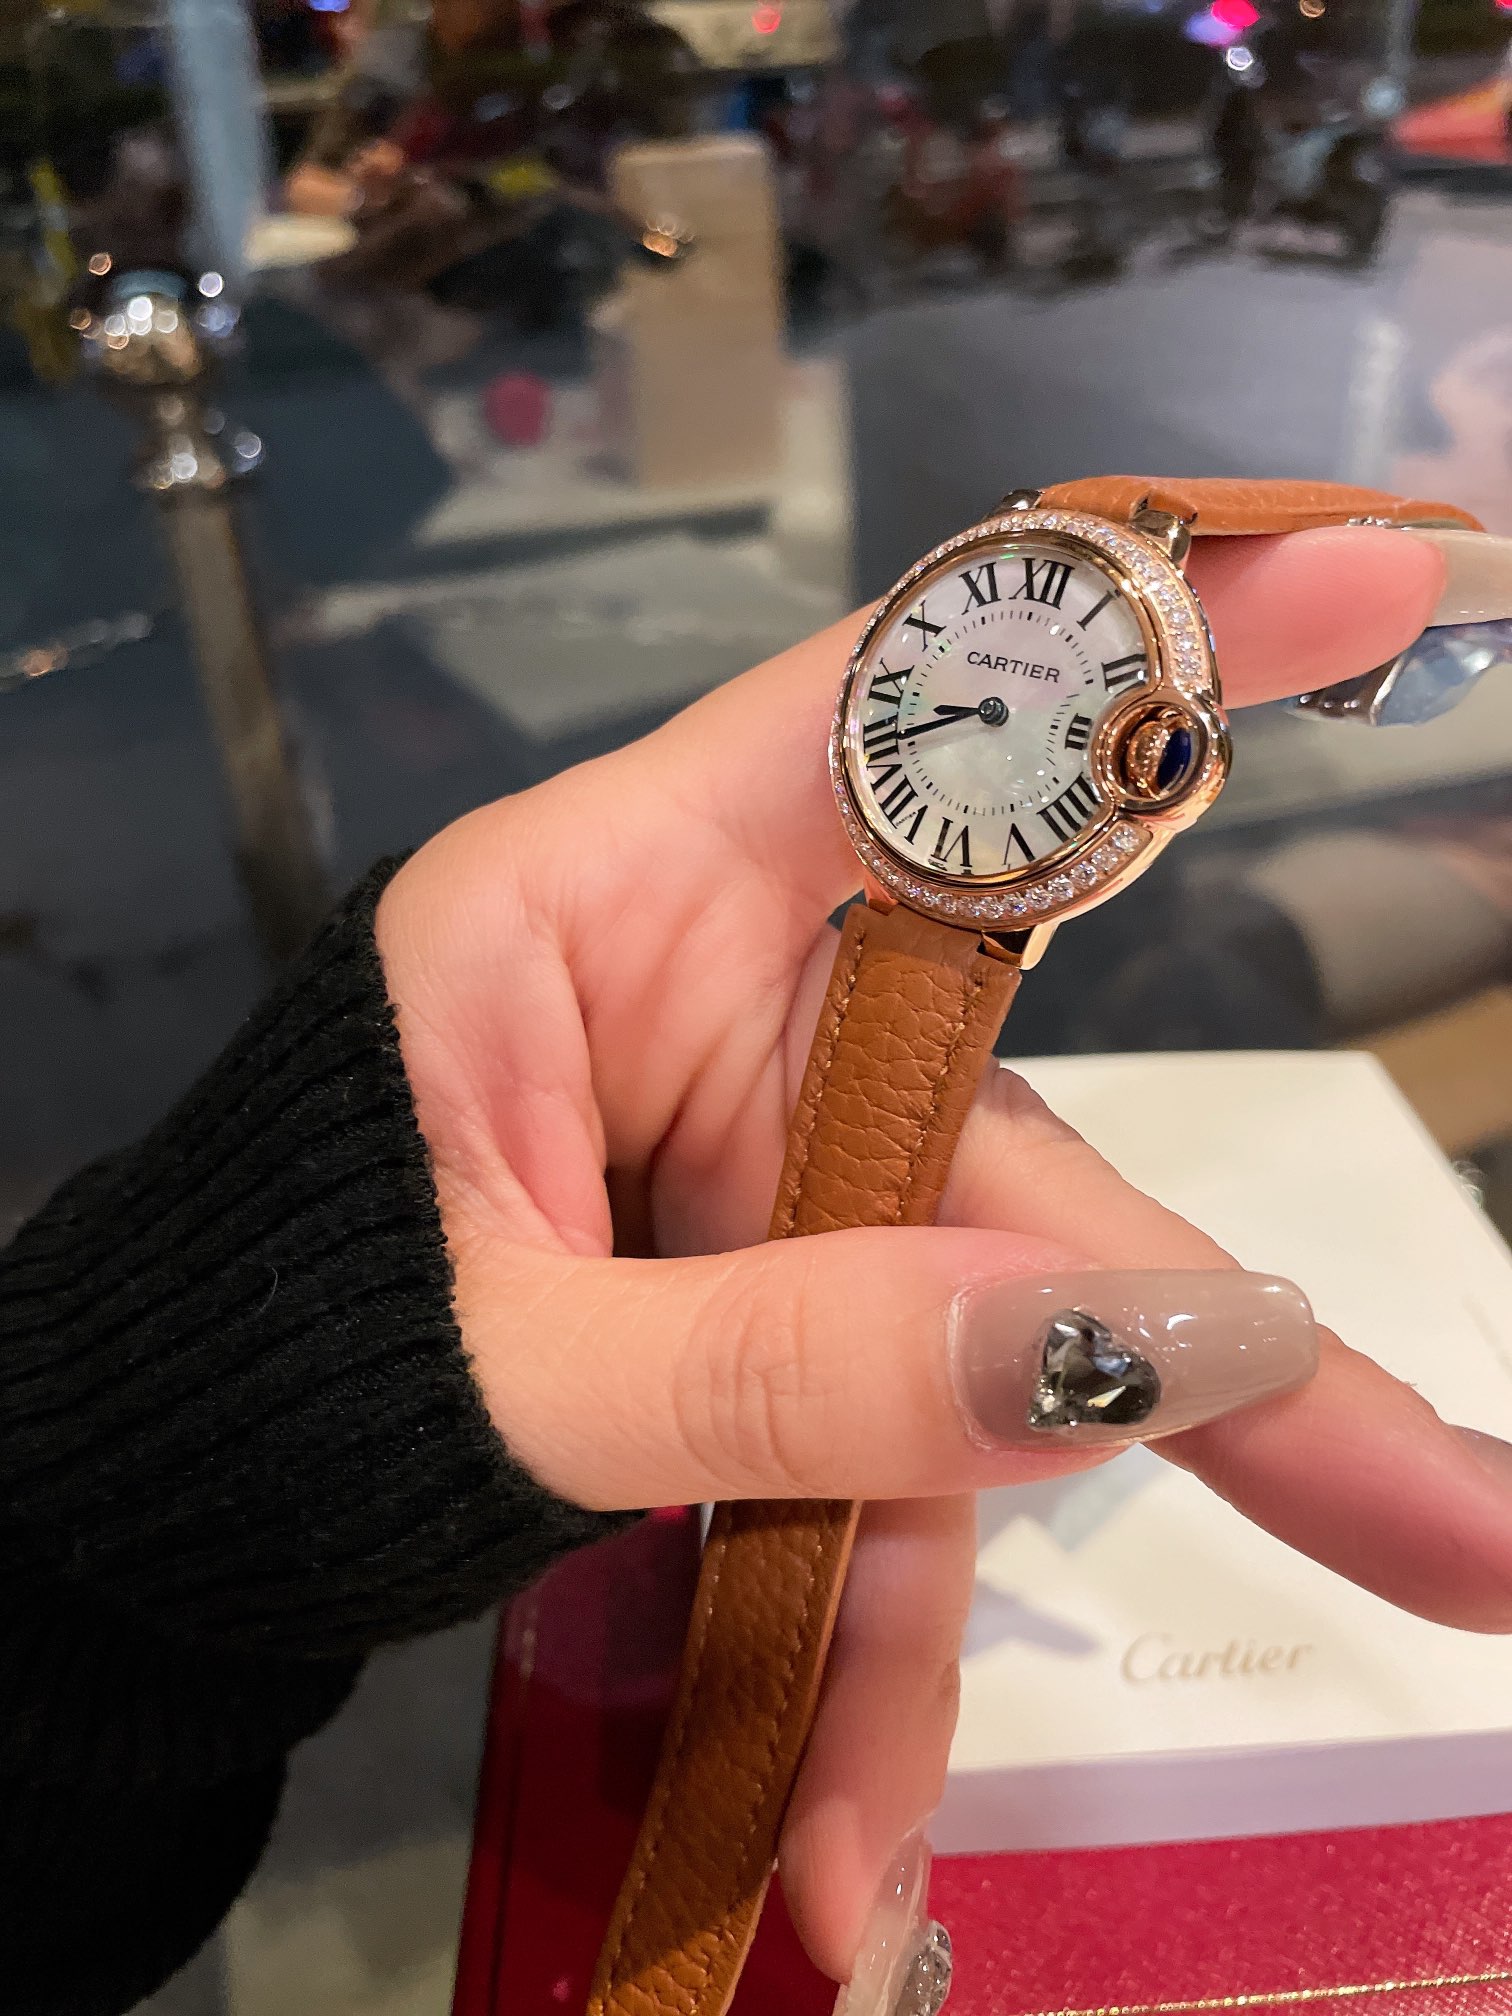 CARTIERカルティエ 腕時計 並行輸入コピー フランス 薄い腕時計 レザー 水晶ダイヤモンド 新商品 限定品 ブラウン_8